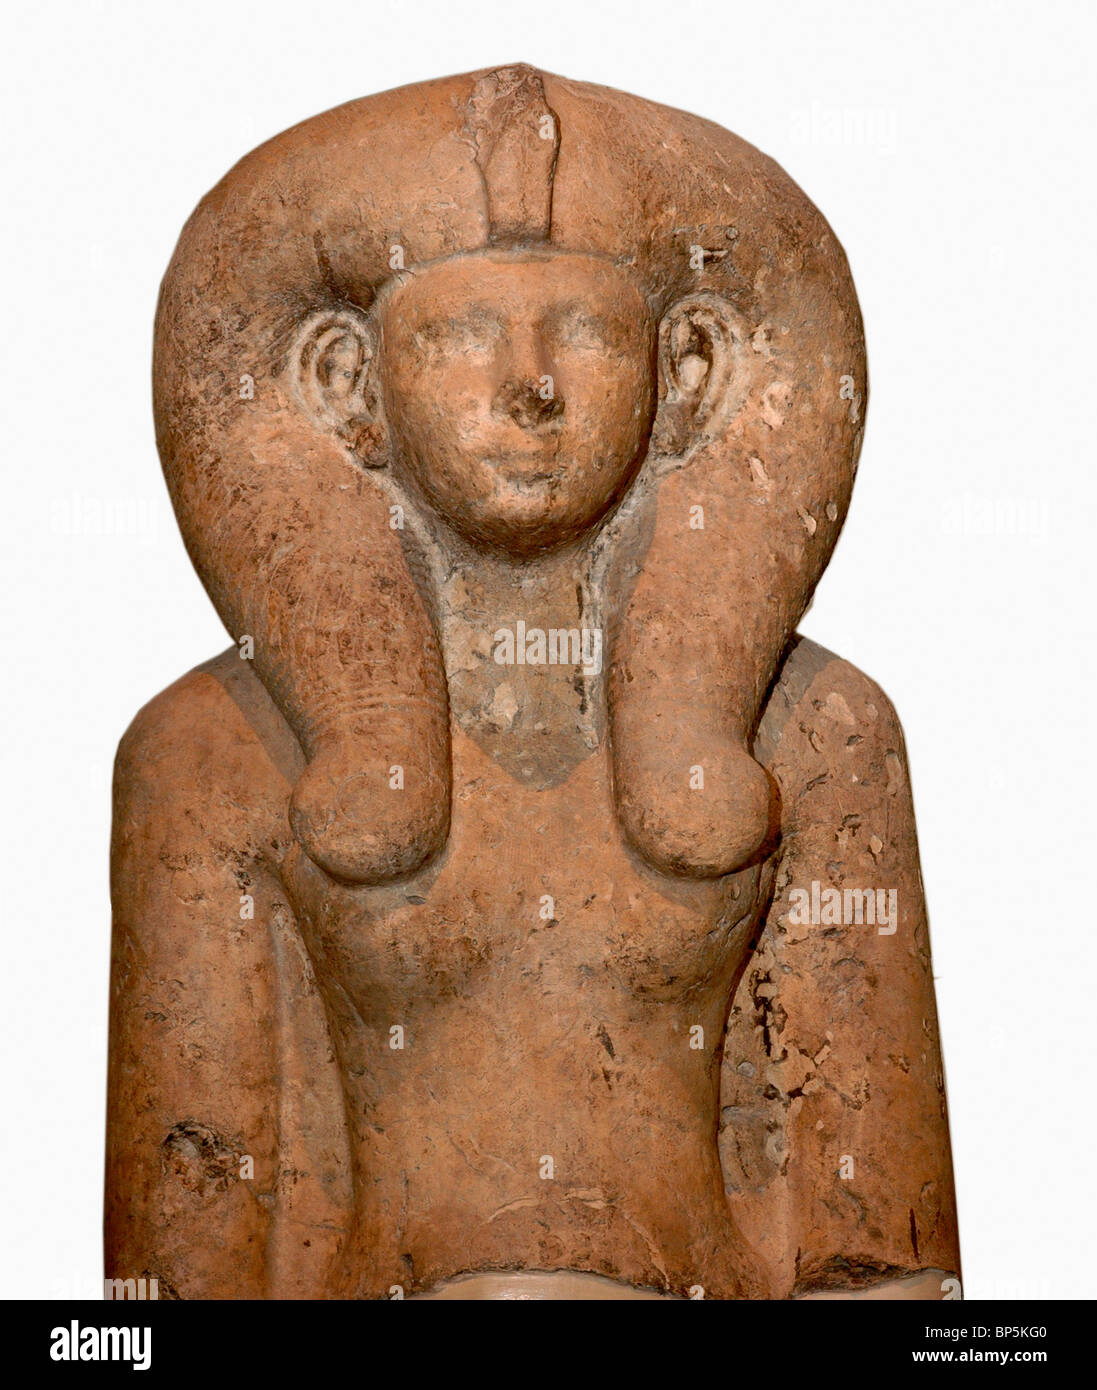 5213. QUEEN AHMES MEKYTAMUN, 15TH. DYNASTY, 1550 BC Stock Photo